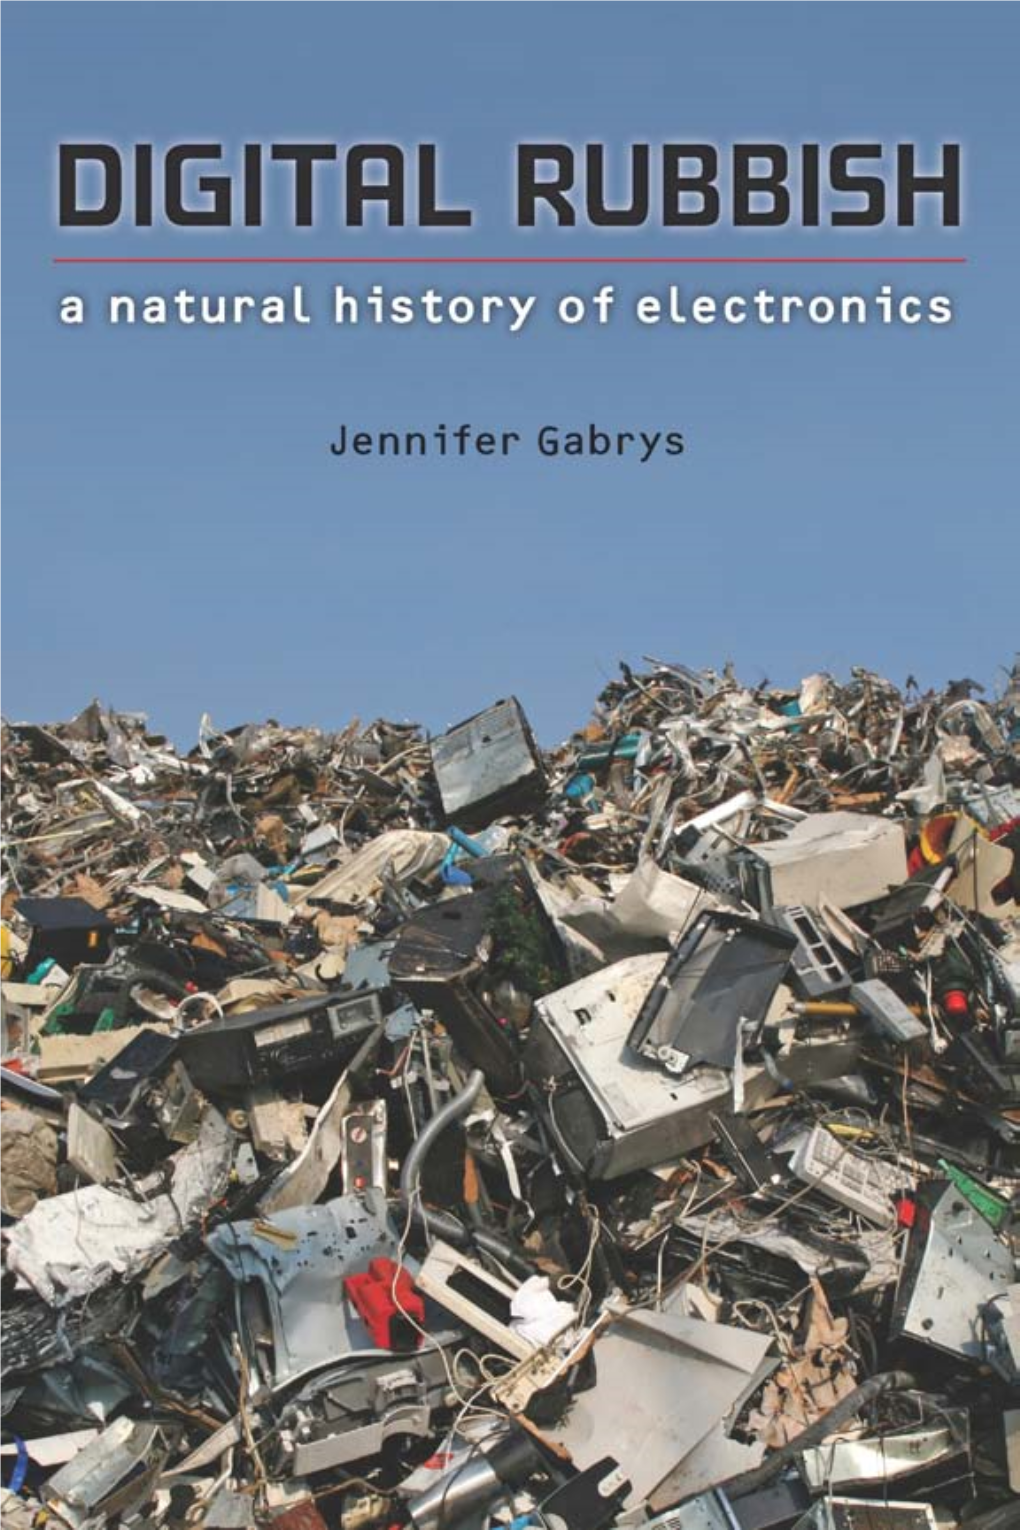 Digital Rubbish: a Natural History of Electronics